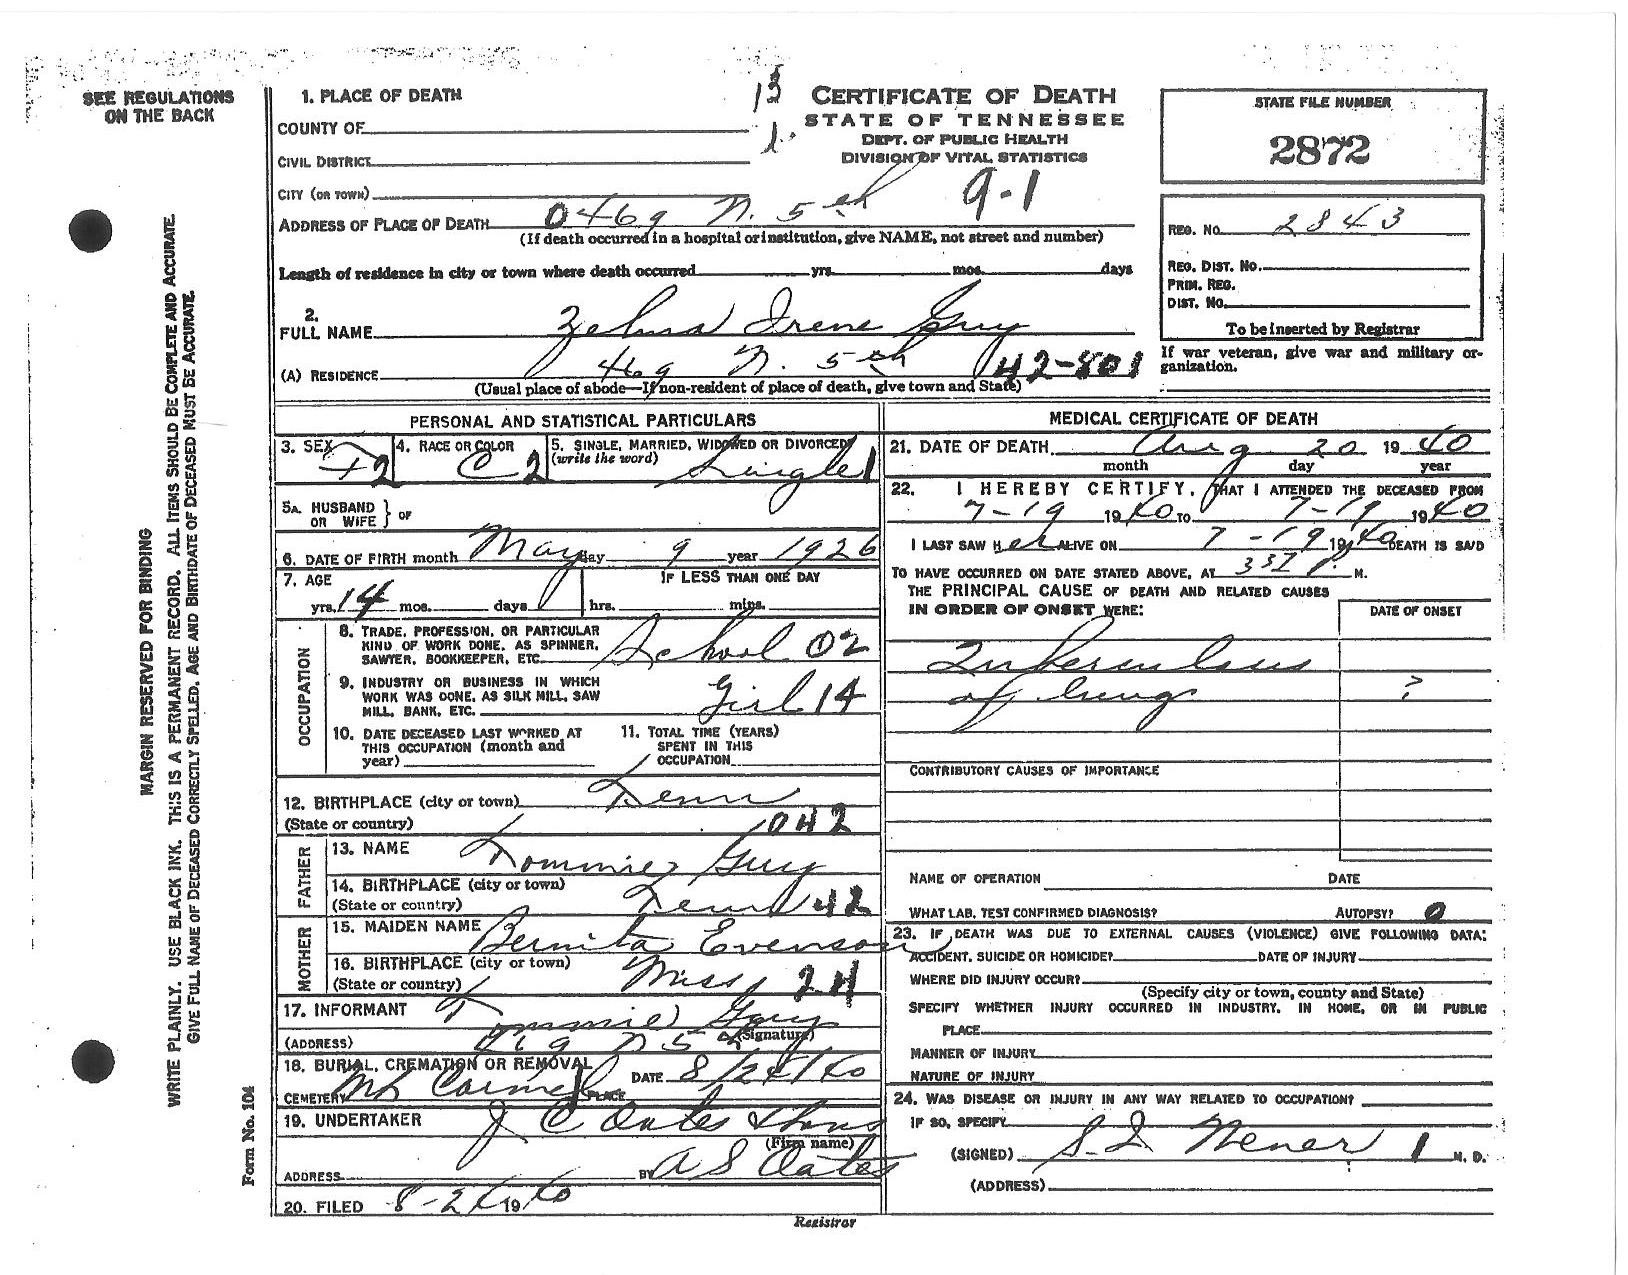 Zelma Irene Guy's Death Certificate.